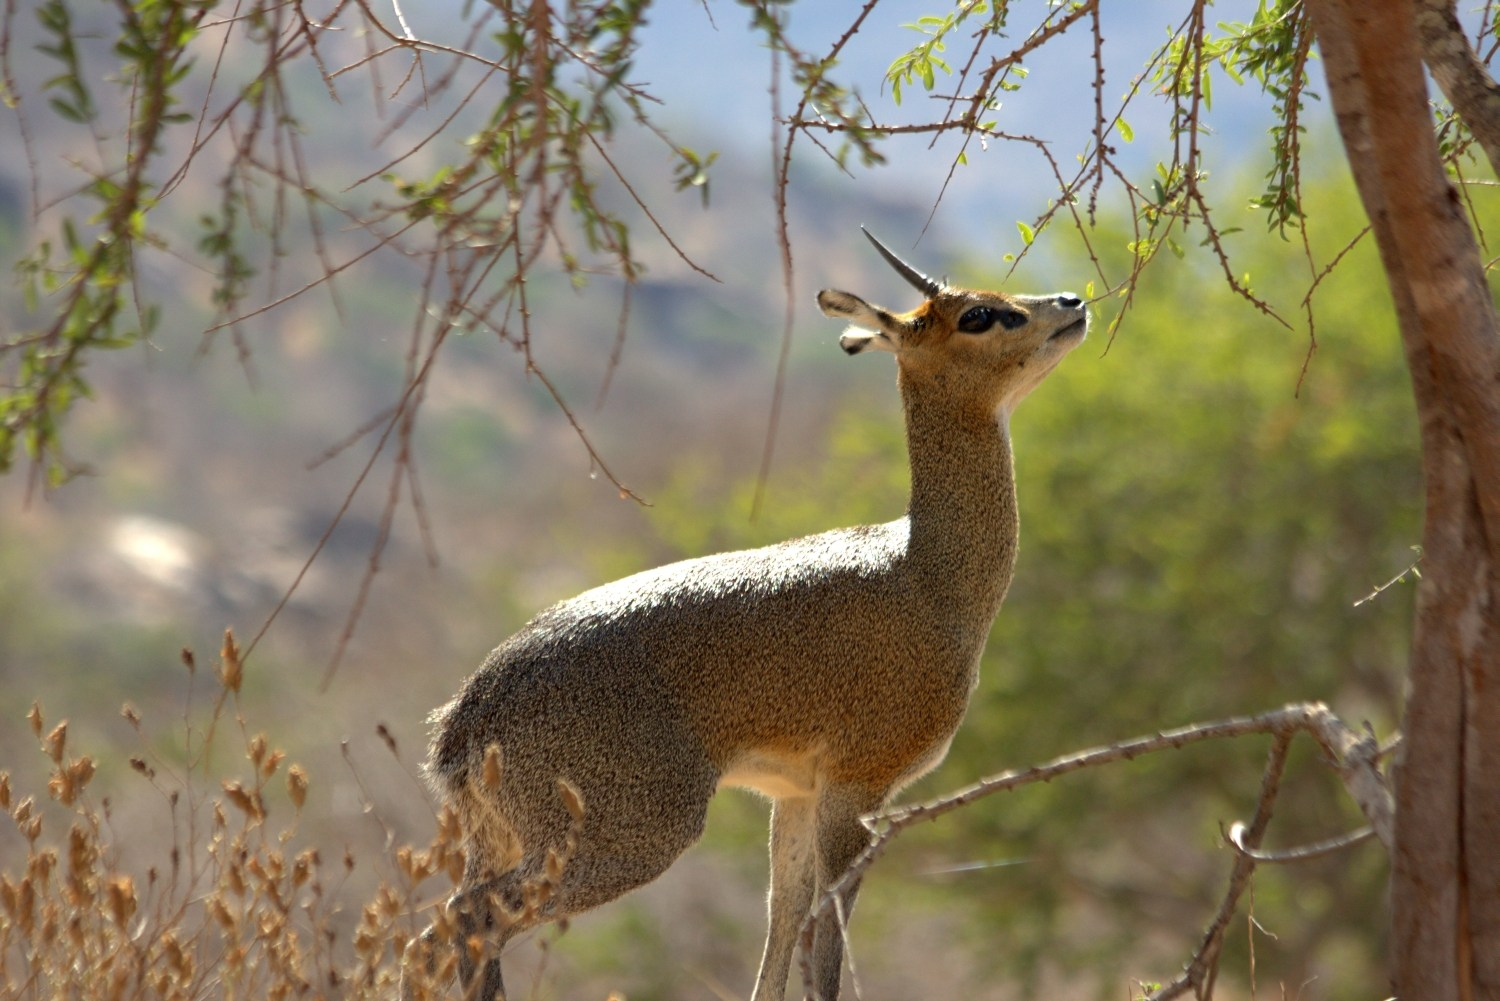 Arabuko Sokoke National Park, Kenya